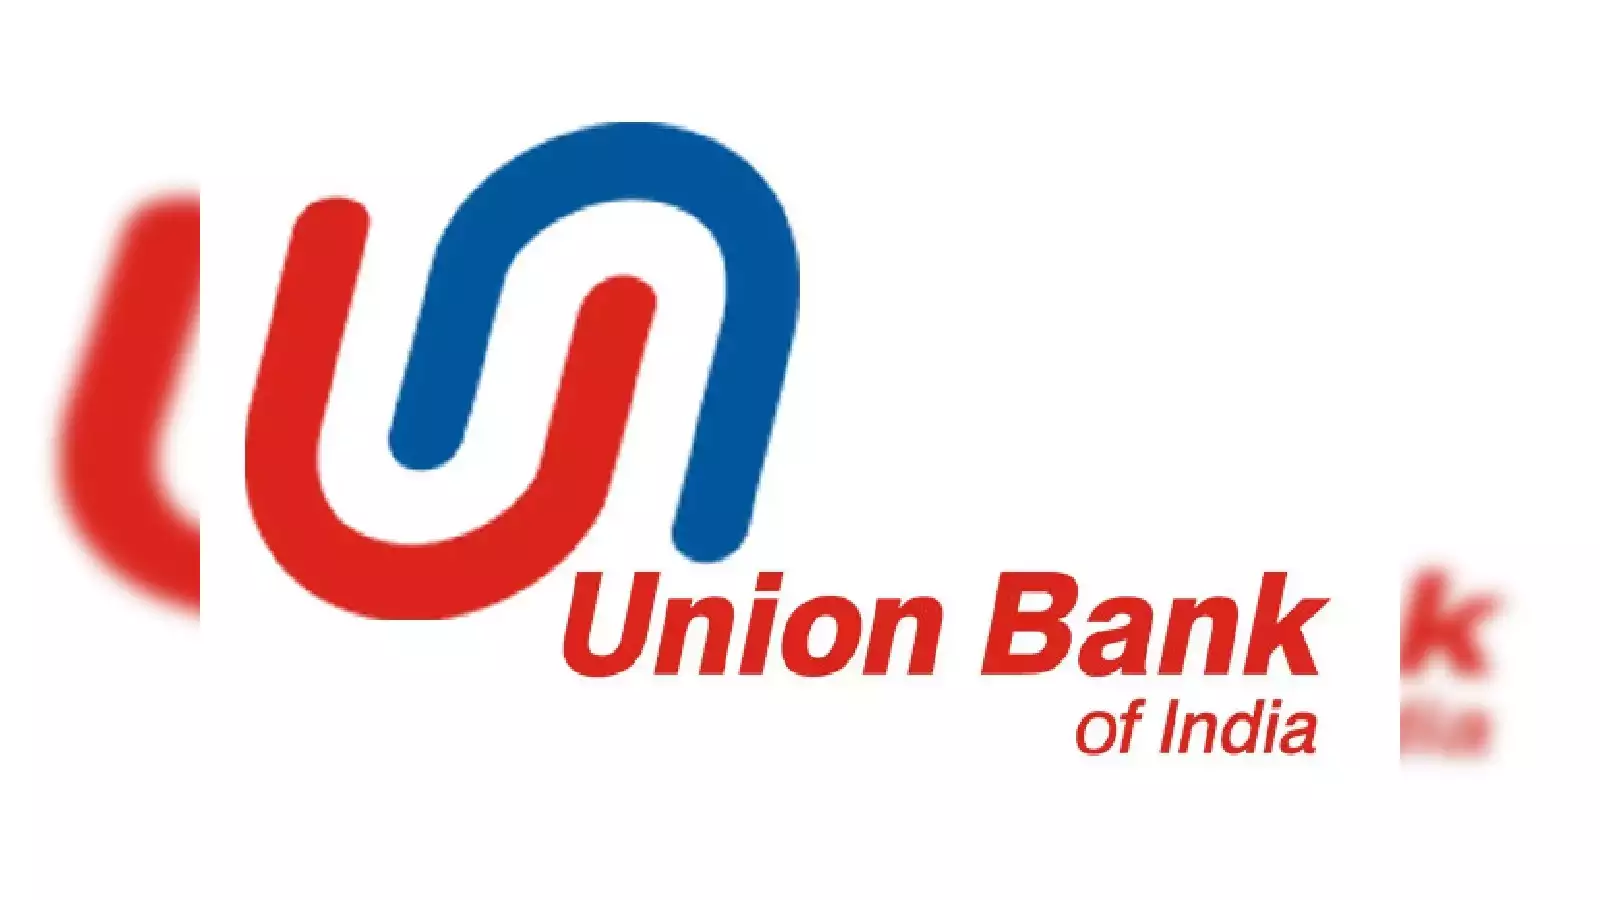 Union Bank of India வேலைவாய்ப்பு: Jewel Appraiser காலி பணியிடங்கள் நிரப்பப்படவுள்ளன - 10ம் வகுப்பு தேர்ச்சி பெற்றவர்கள் விண்ணப்பிக்கலாம்